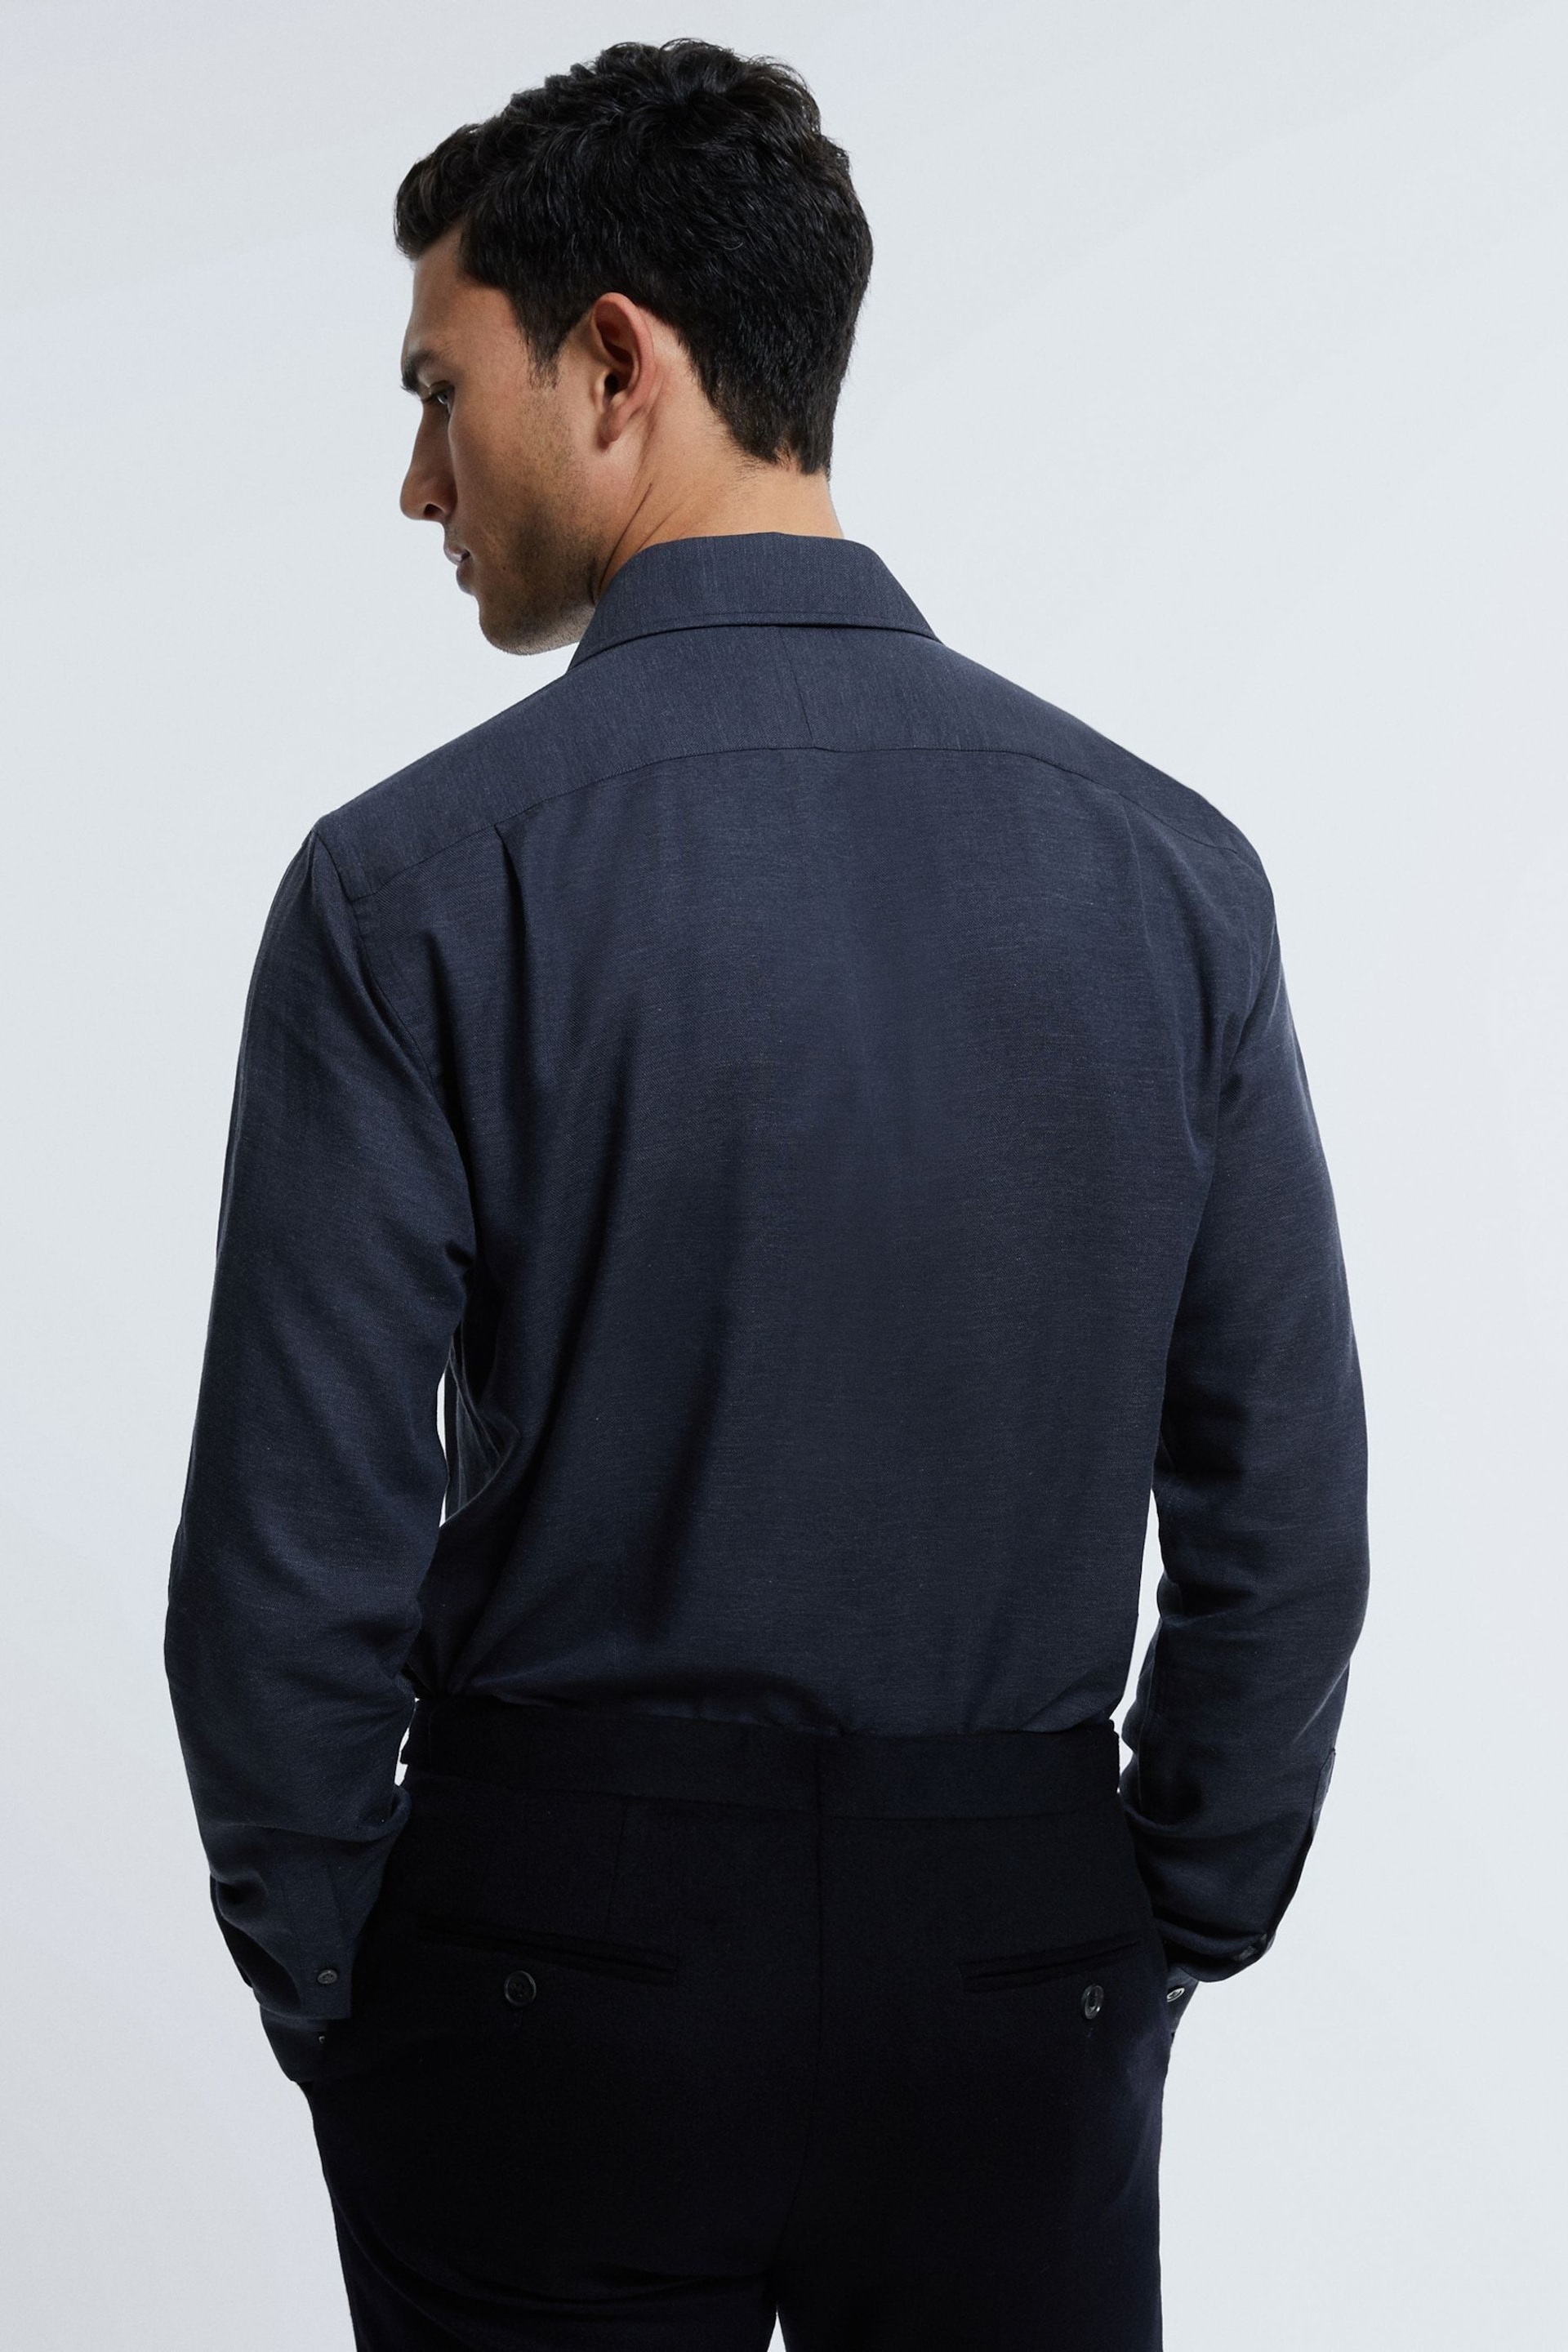 Reiss Navy Croydon Italian Cotton Cashmere Shirt - Image 5 of 6